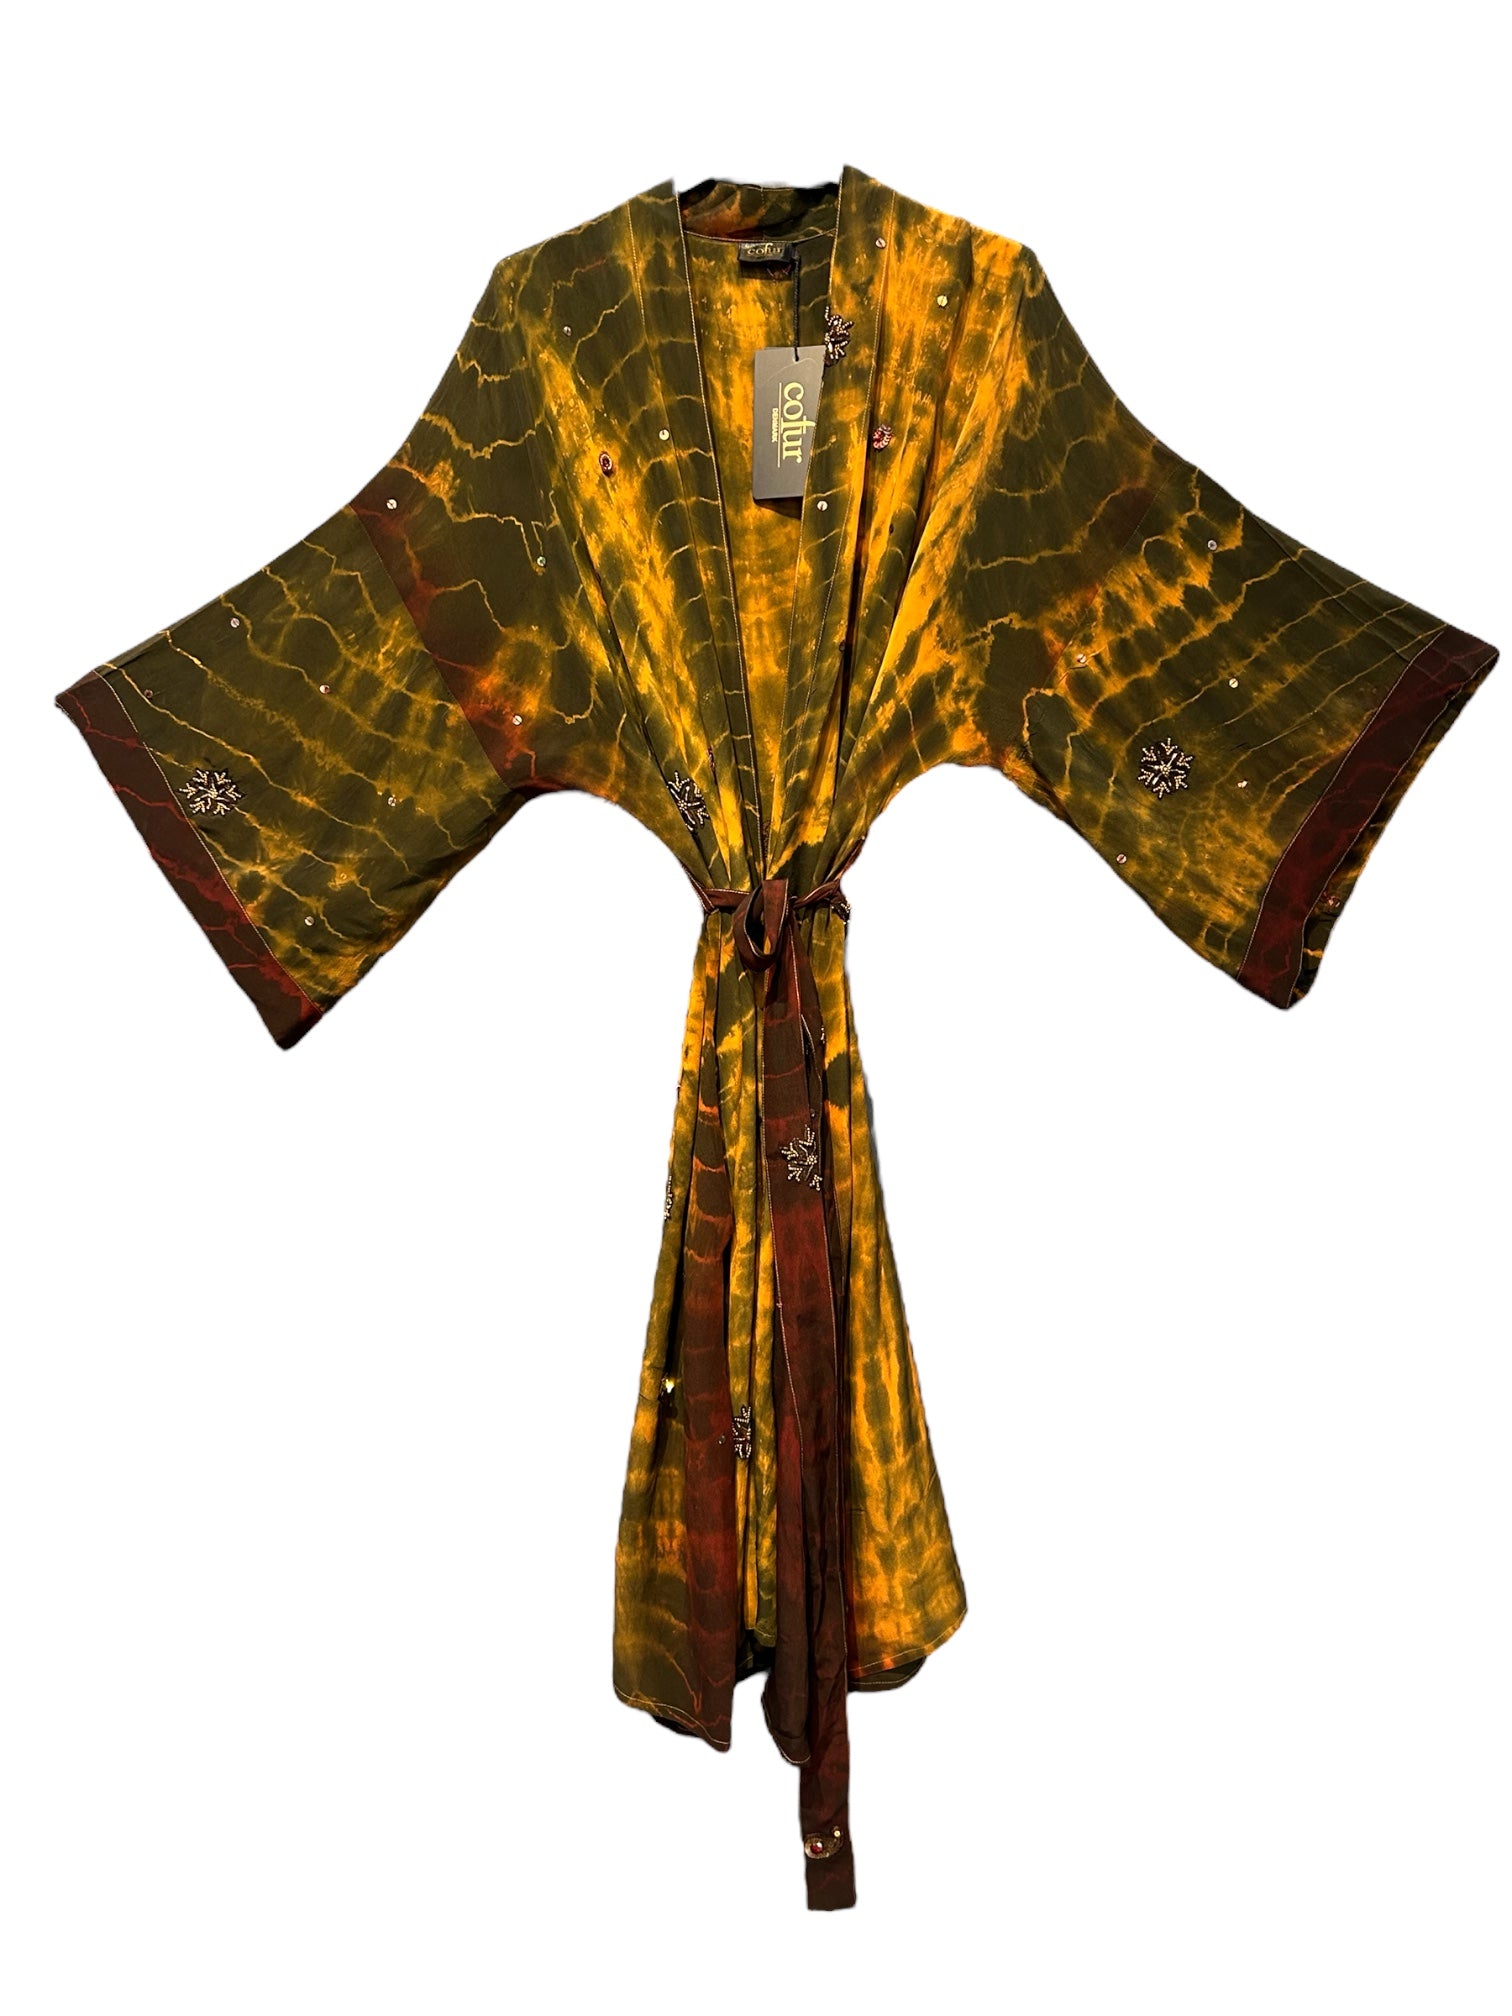 Dubai Kimono - No 1 One Size